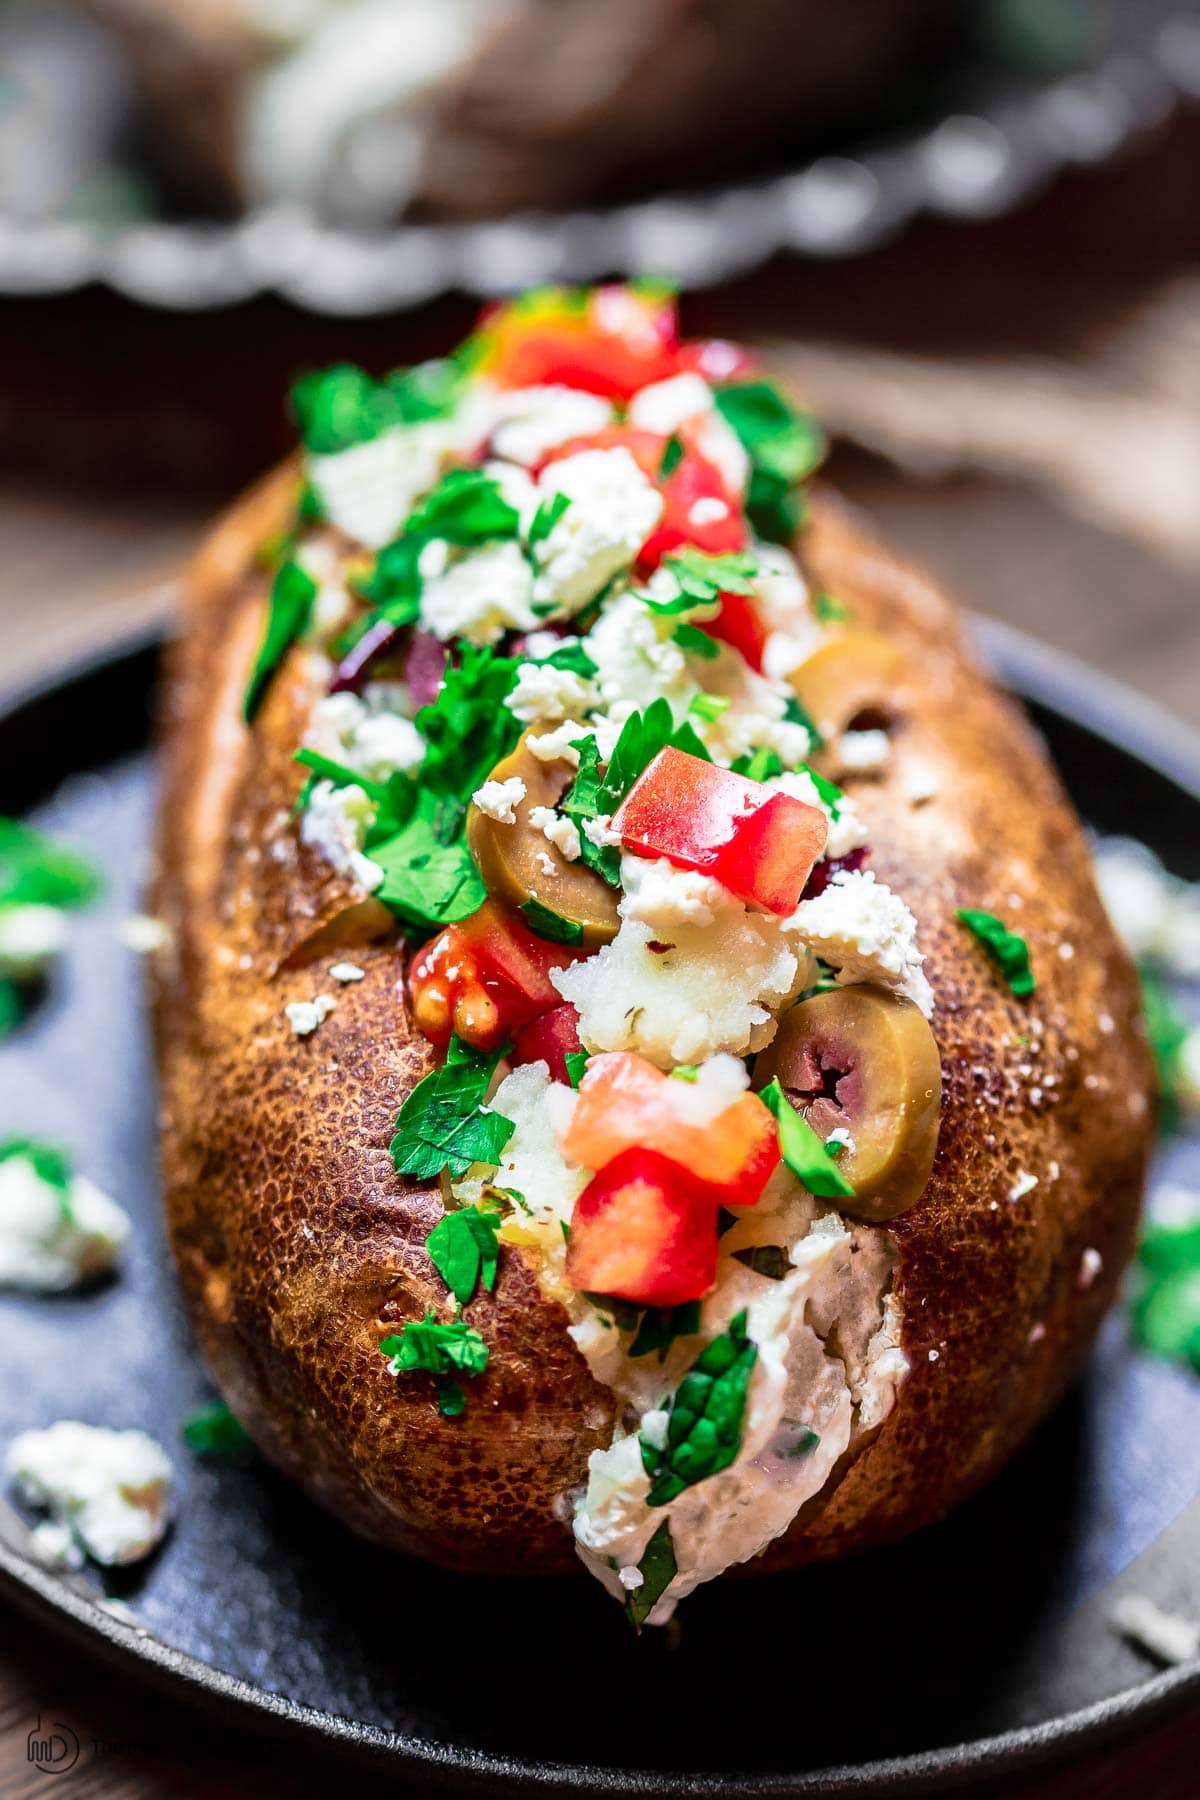 Loaded Baked Potato, Mediterranean-style